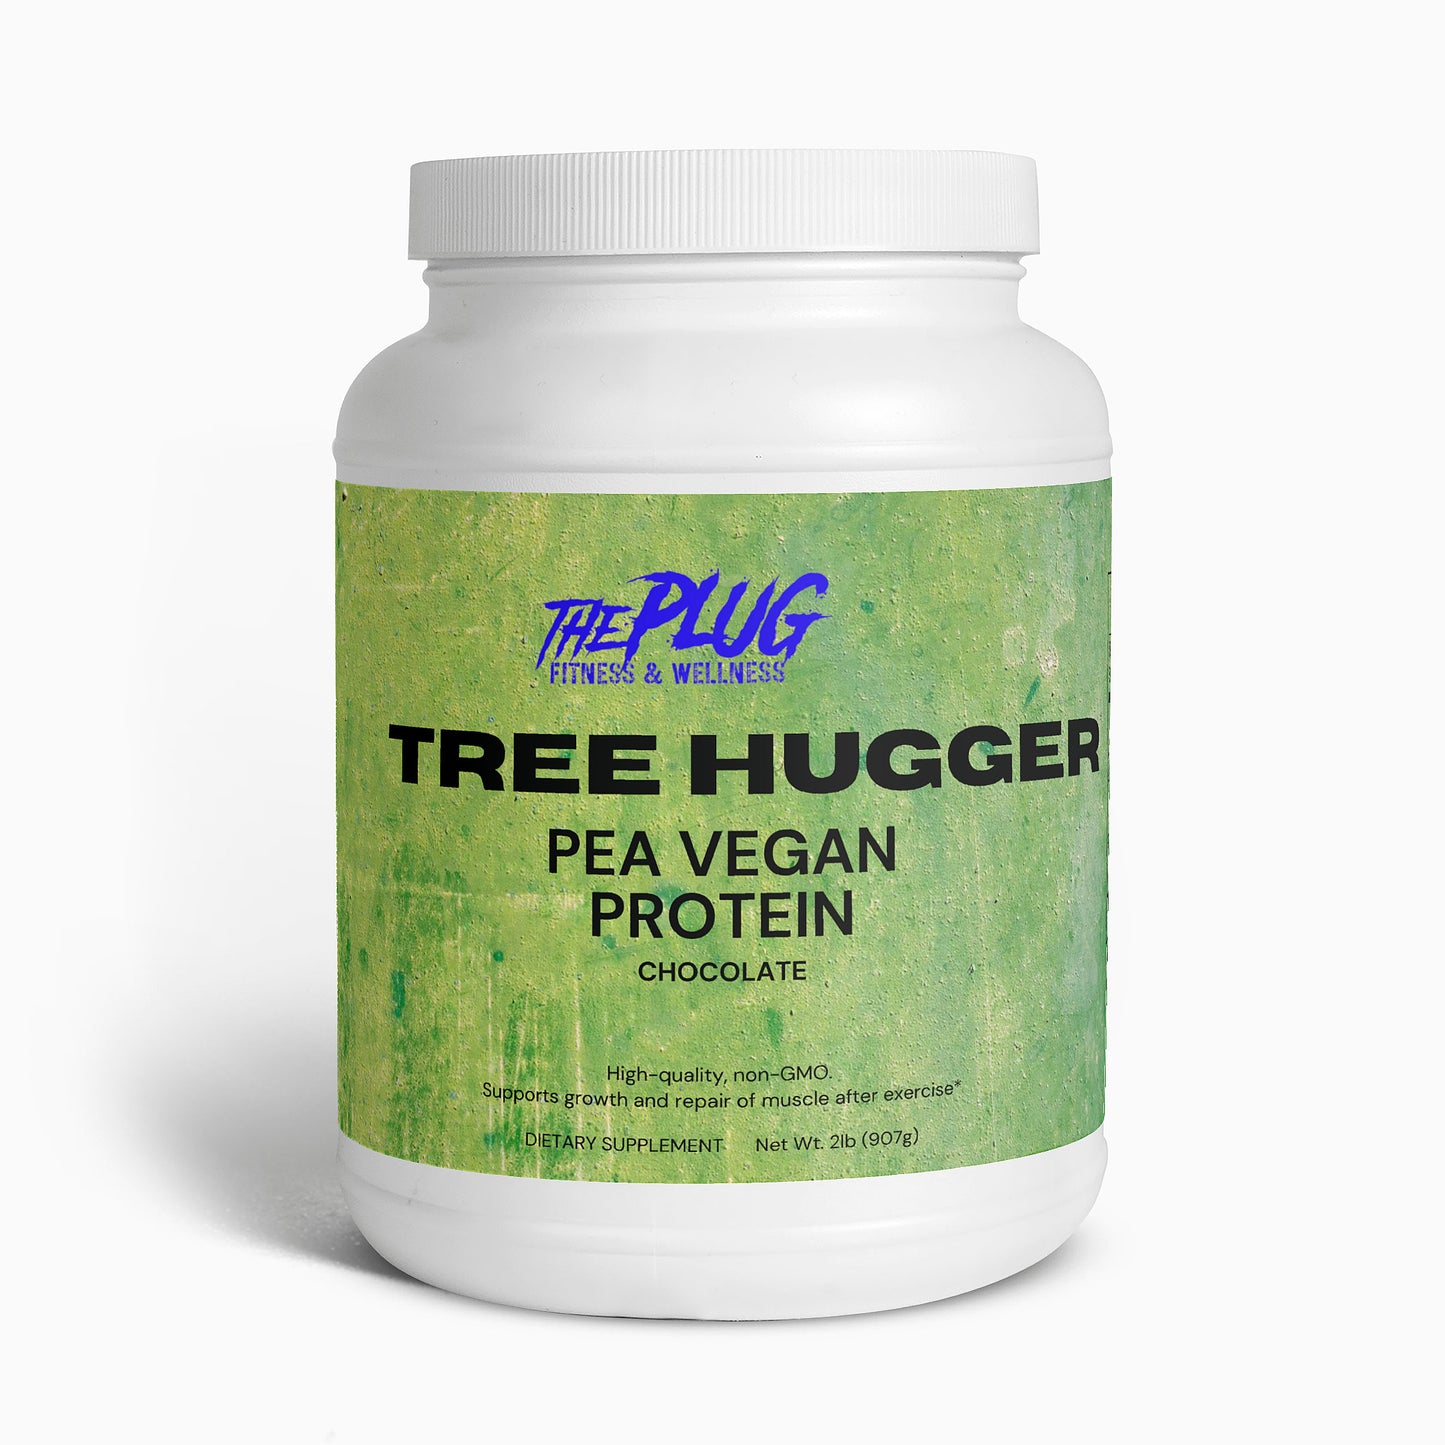 TREE HUGGER (Vegan Pea Protein Chocolate)